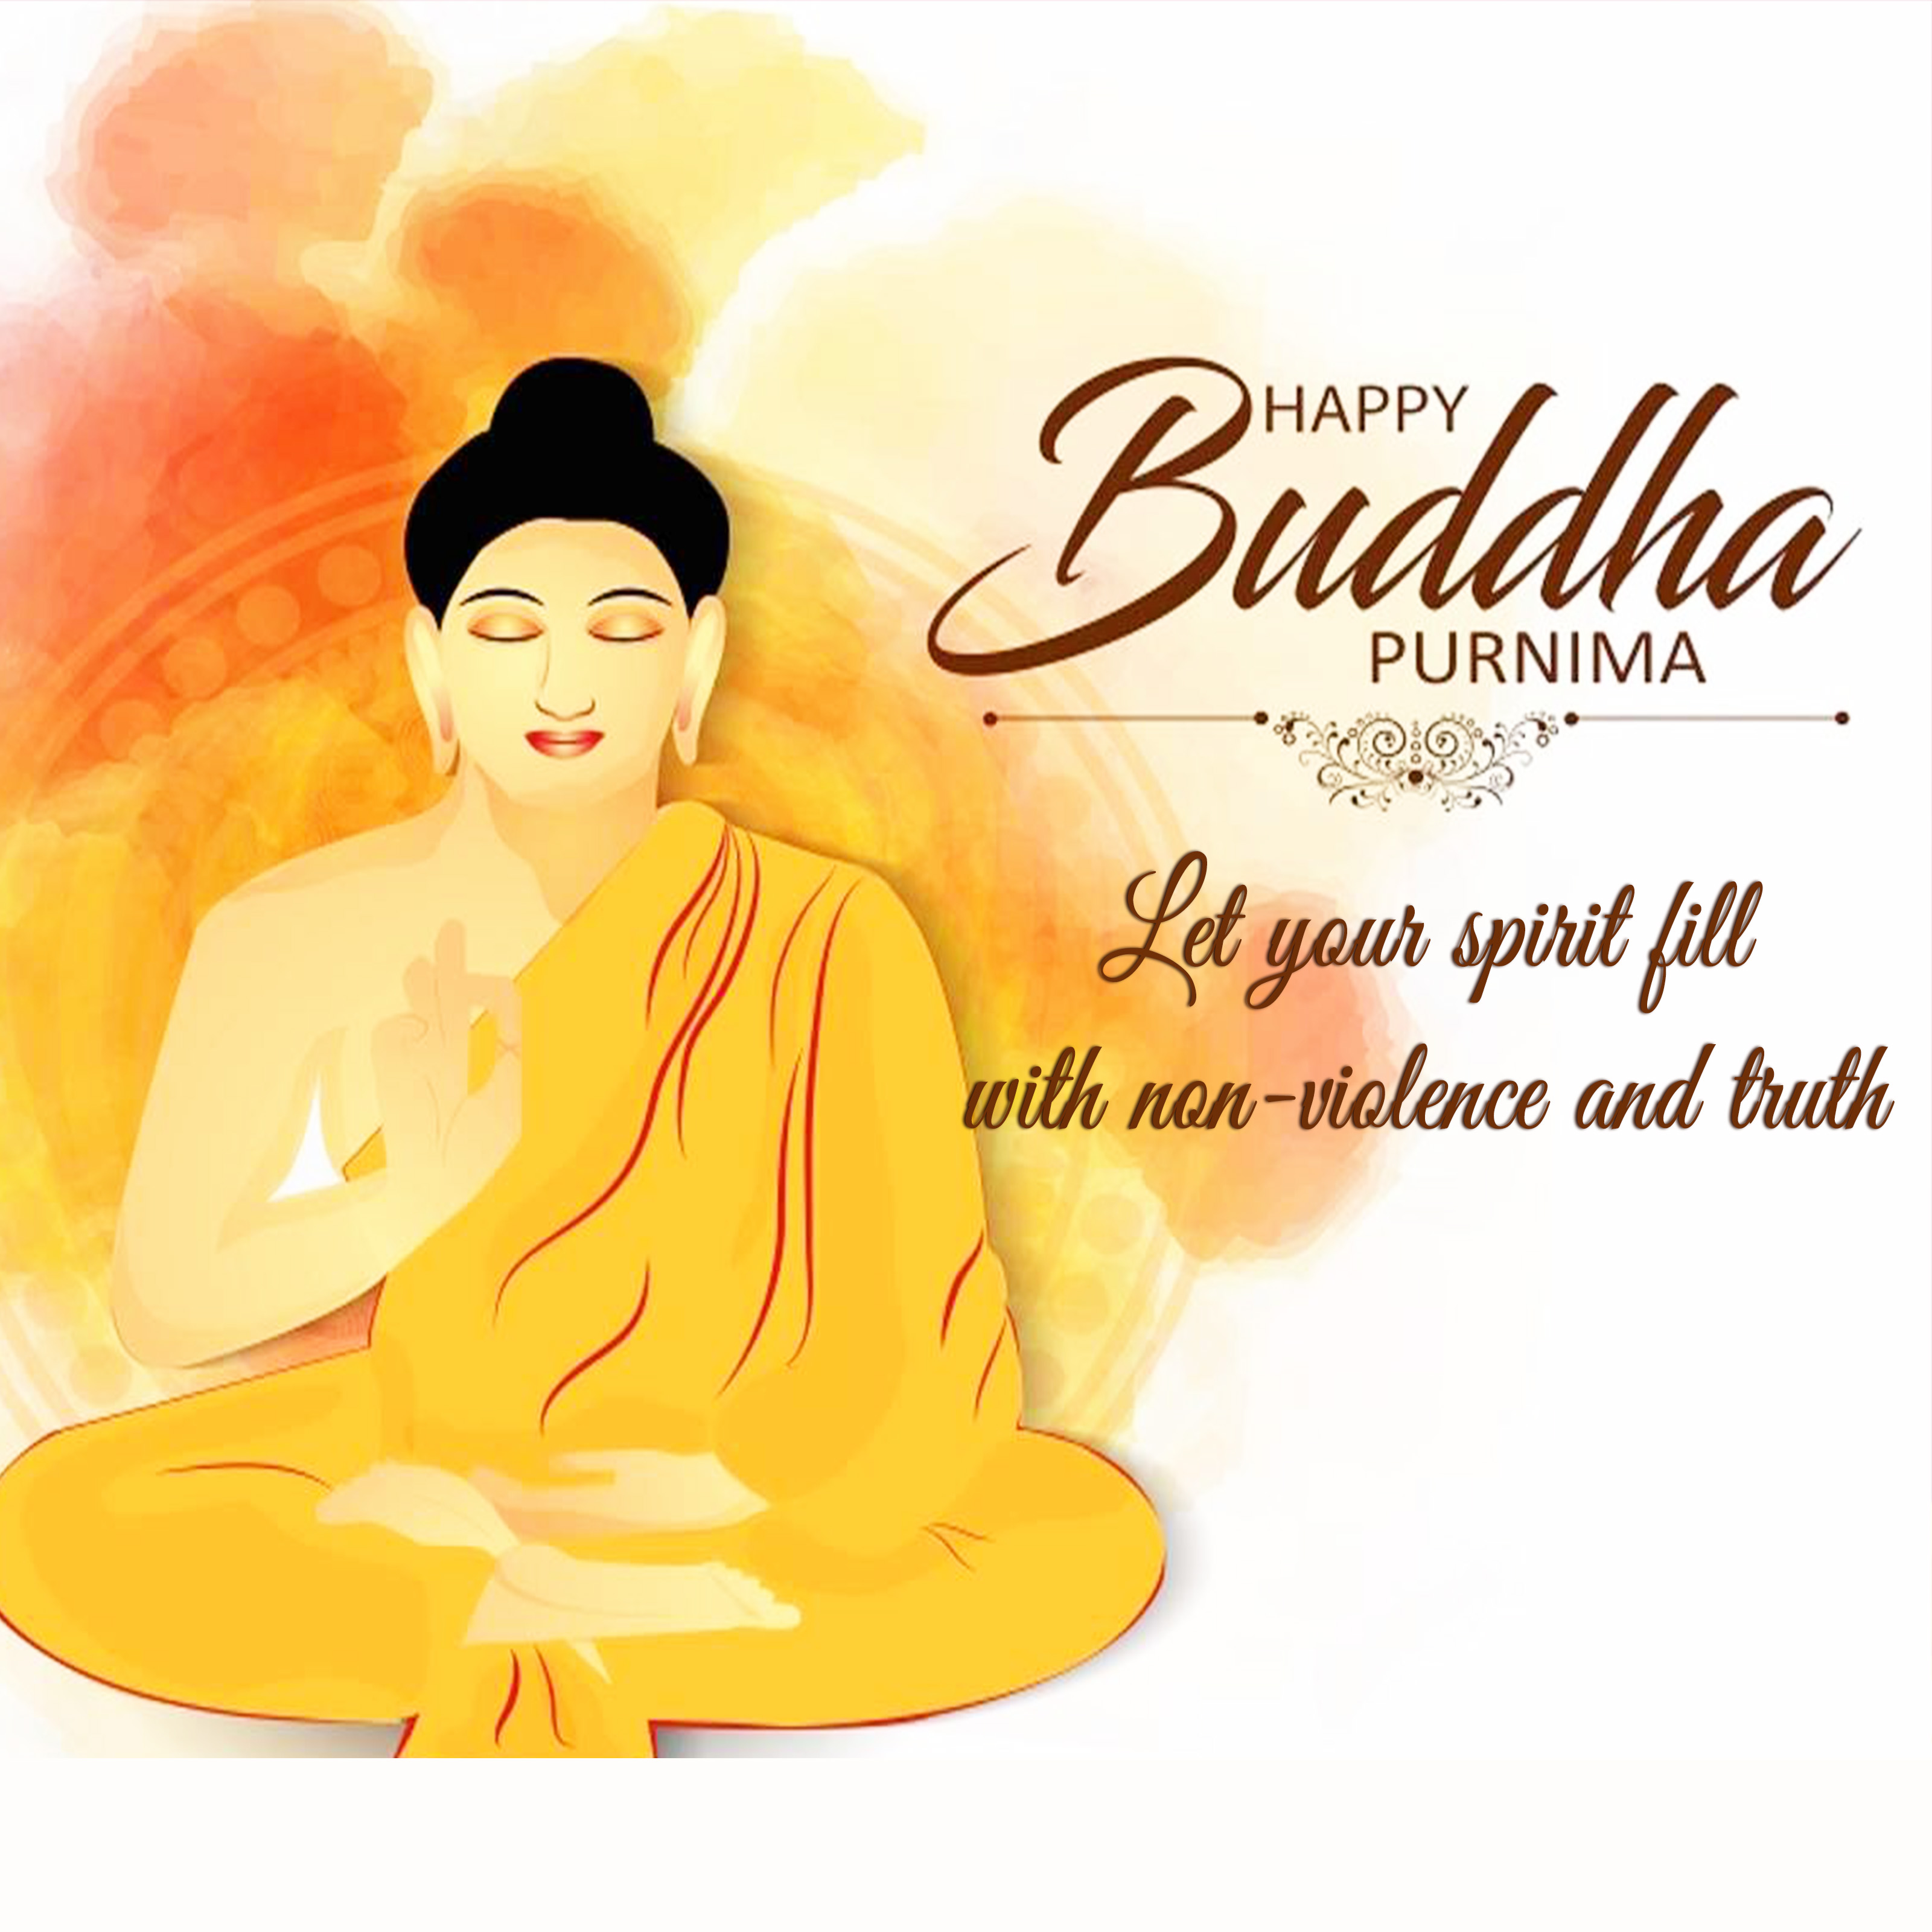 20+ Best Wishes, Images, Quotes, on Buddha Purnima